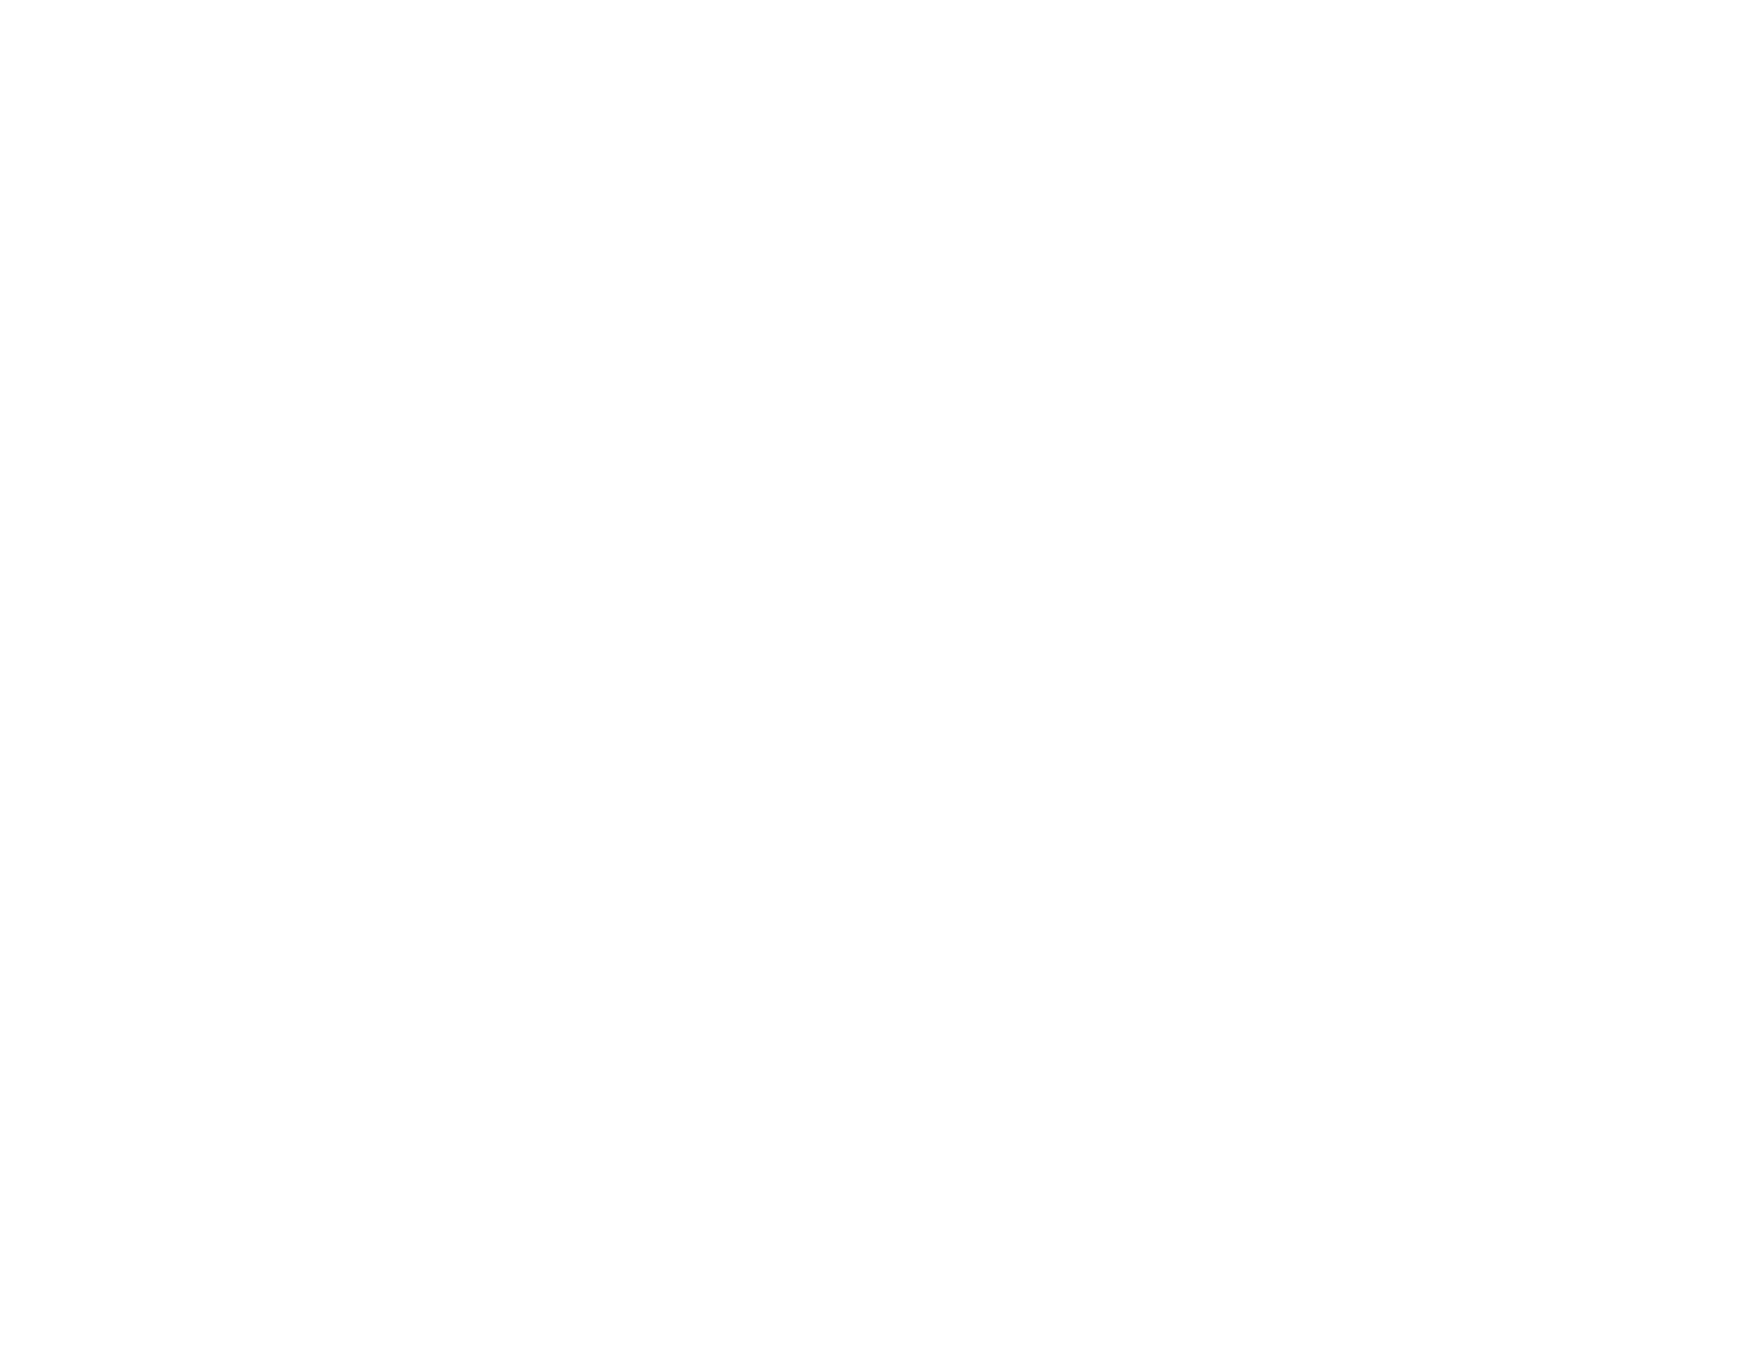 BOH 125 years